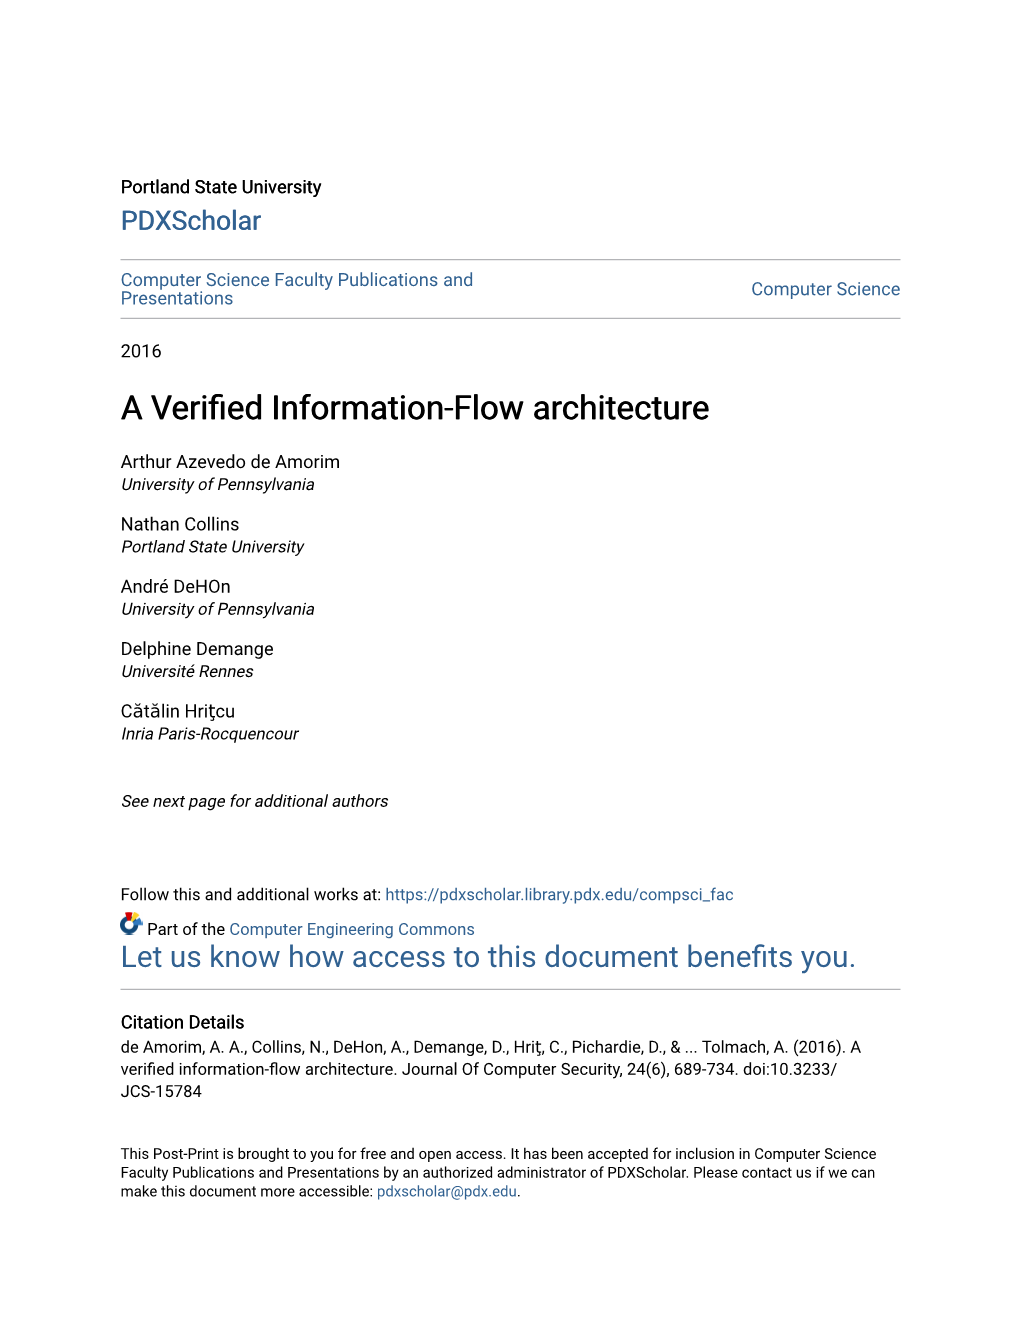 A Verified Information-Flow Architecture